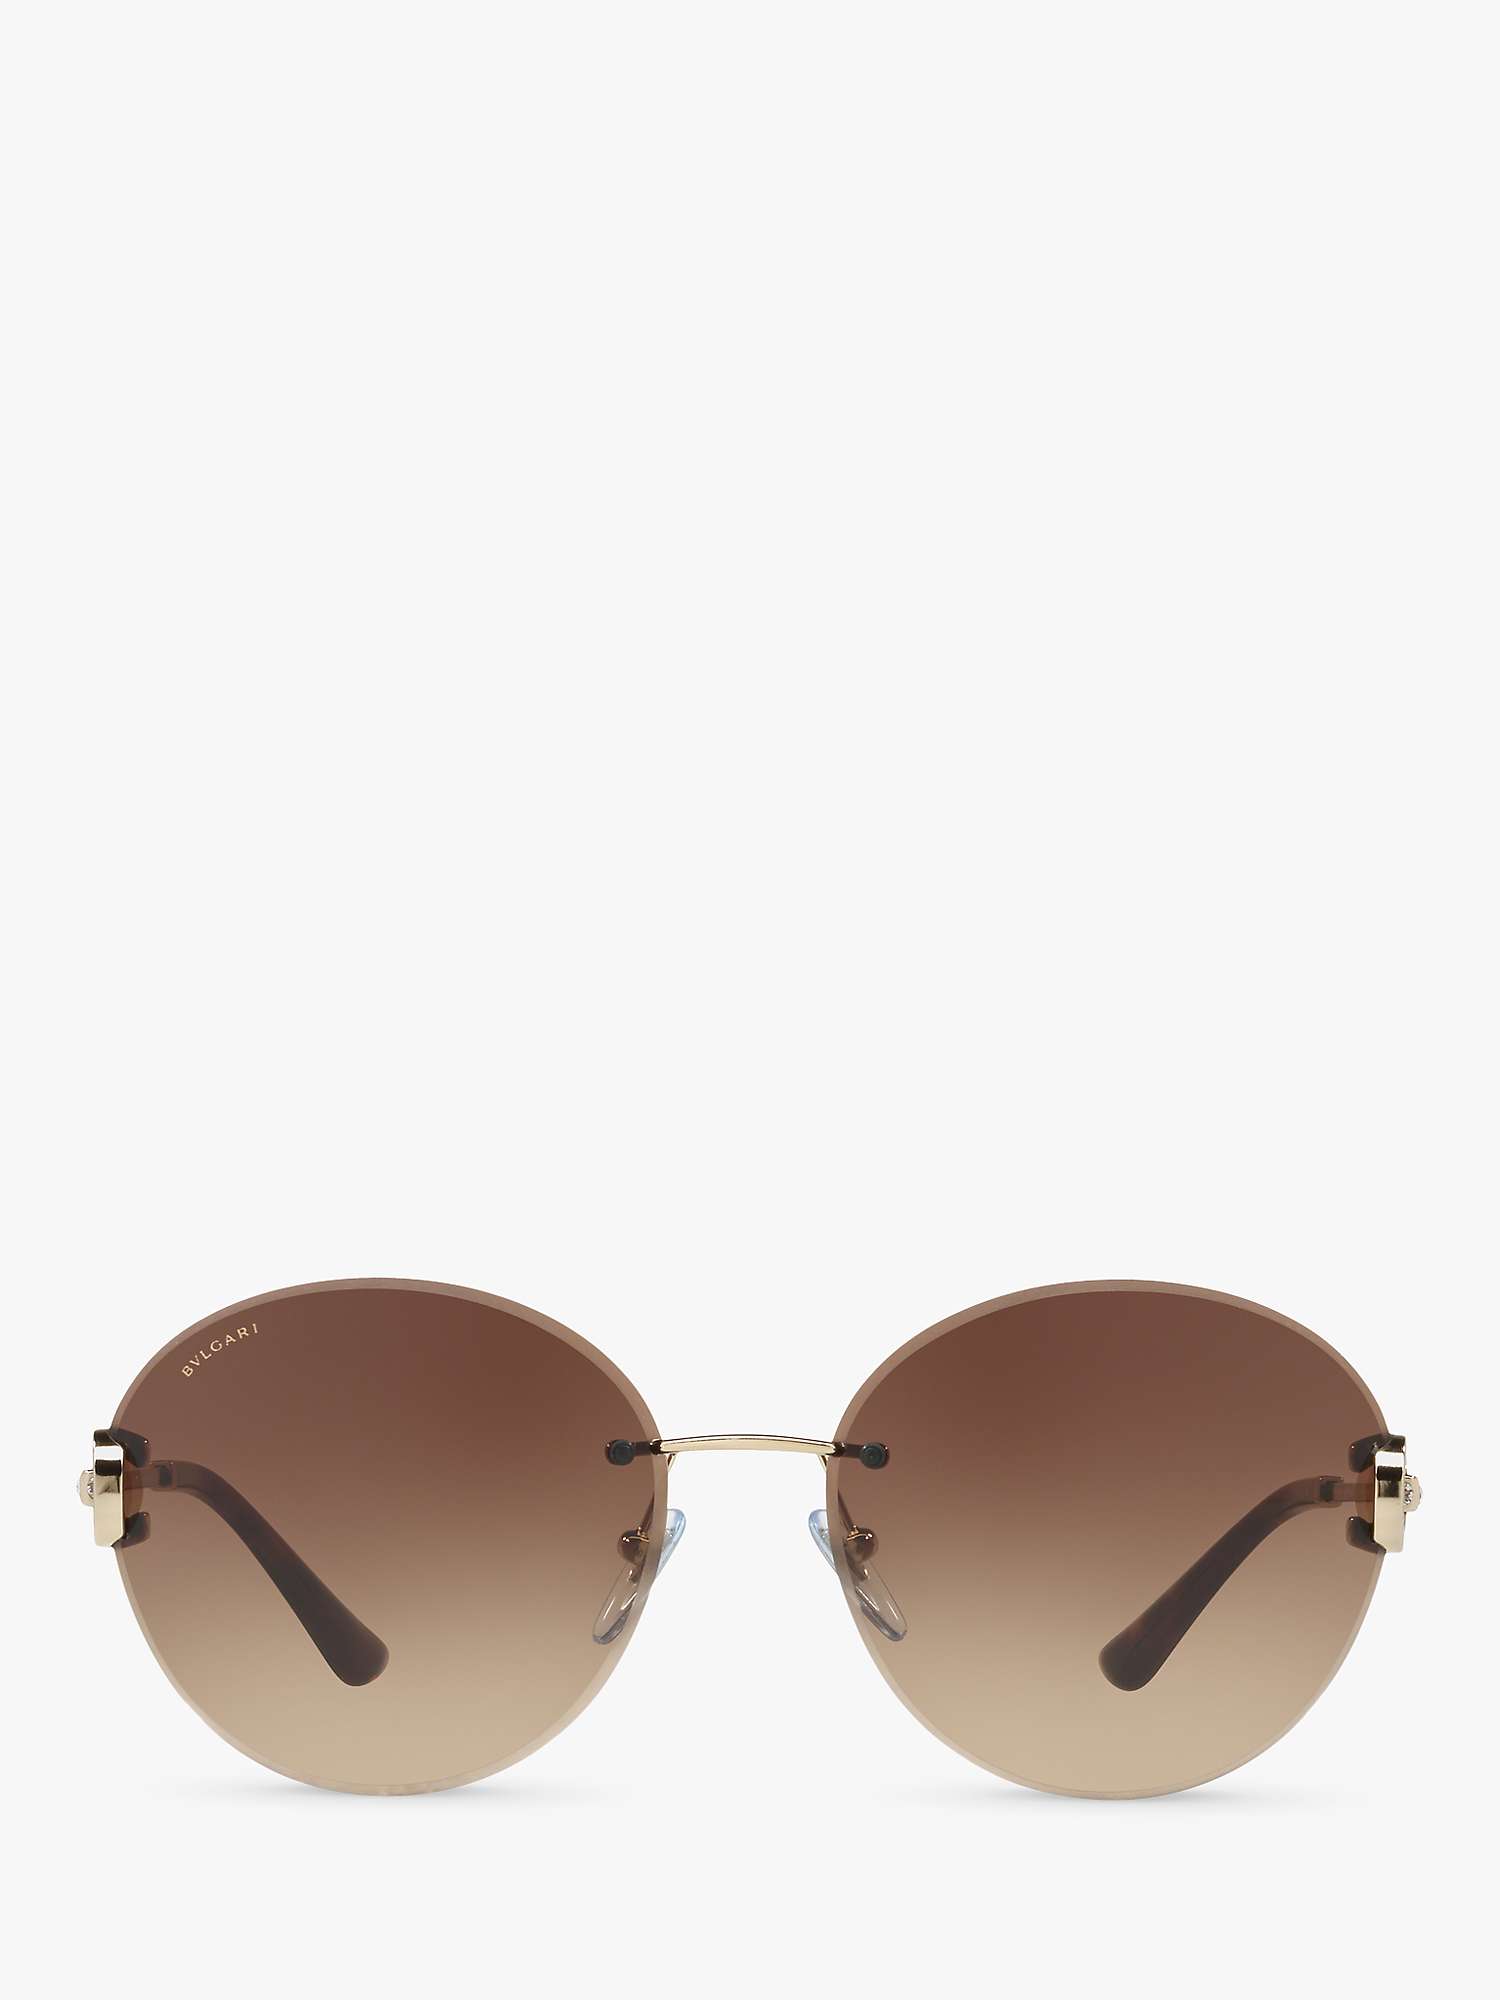 Buy BVLGARI BV6091B Round Sunglasses, Rose Gold/Brown Gradient Online at johnlewis.com